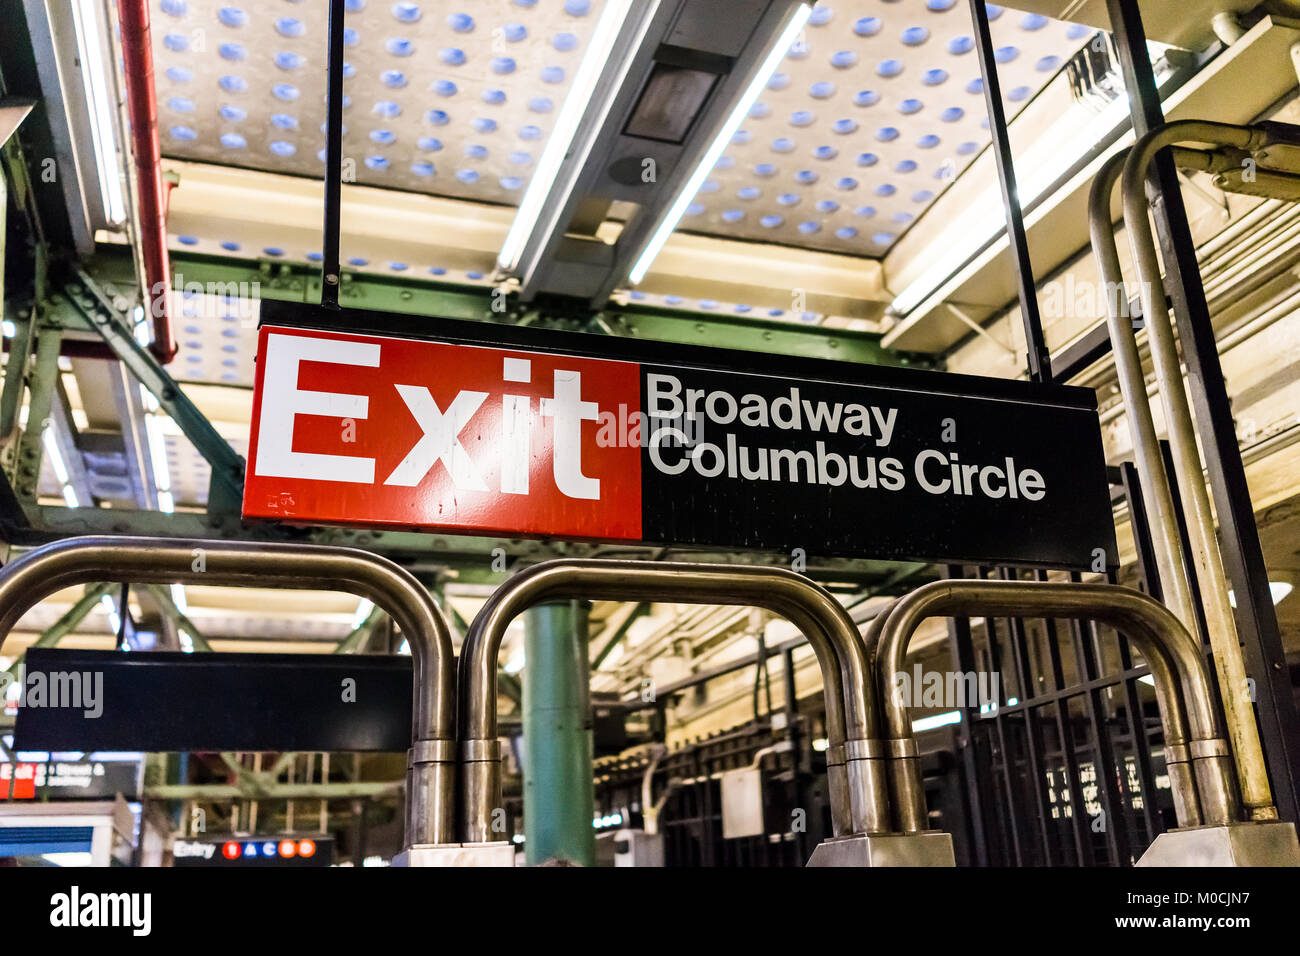 New York City, USA - October 28, 2017: Broadway Columbus Circle exit sign closeup in underground platform transit in NYC Subway Station Stock Photo